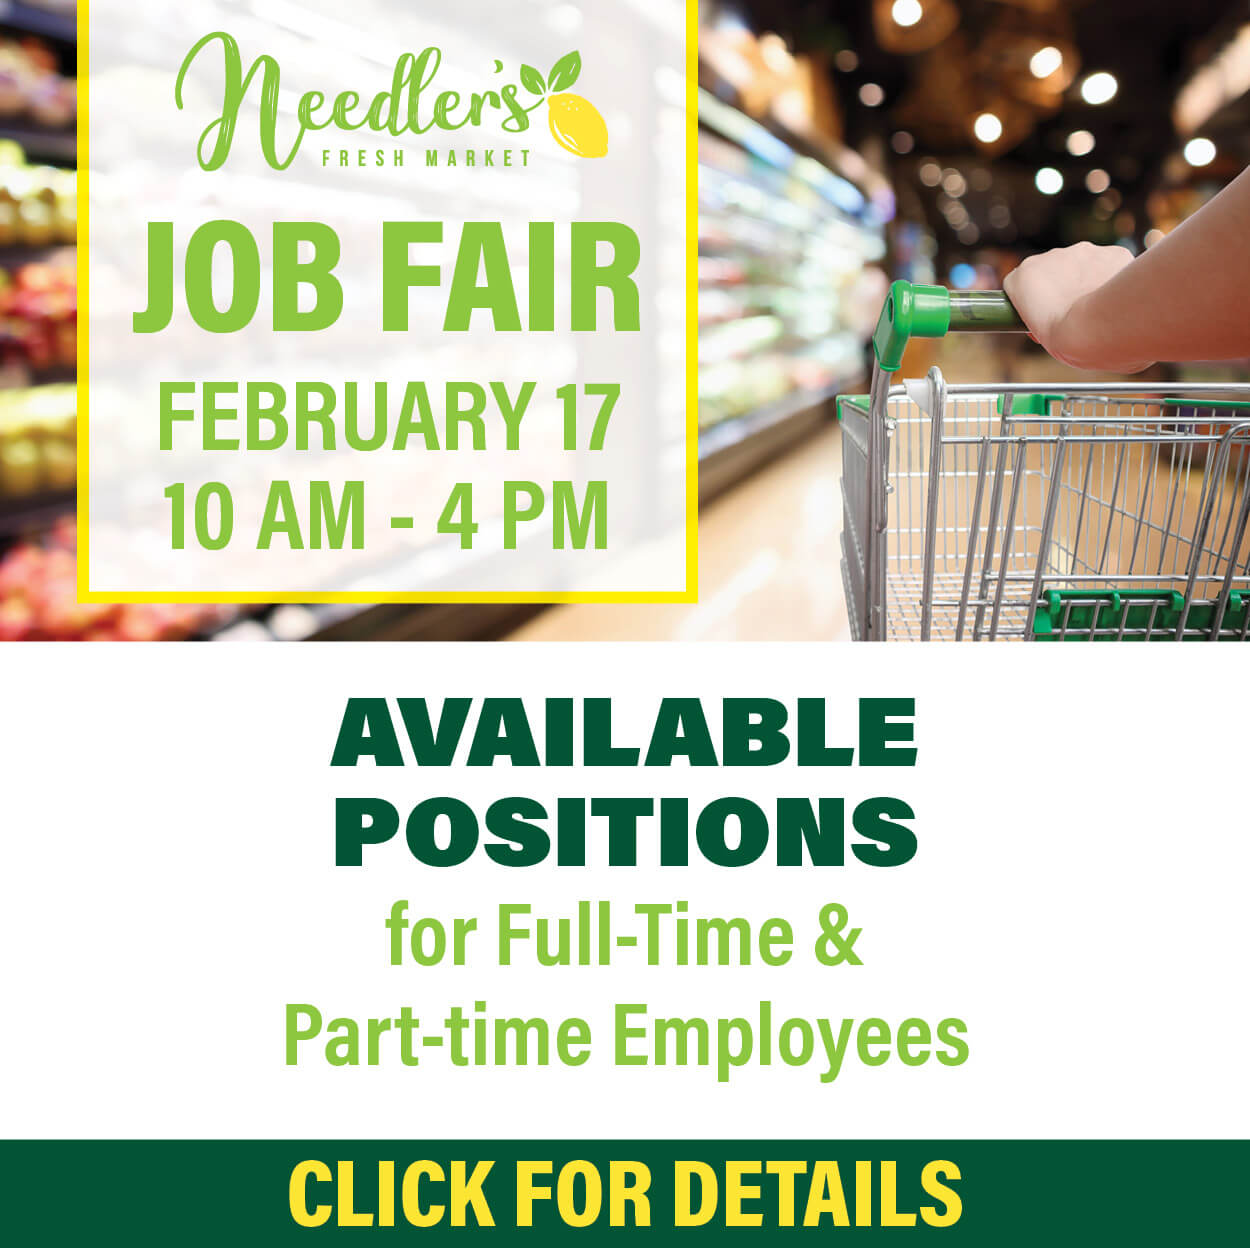 Needler's Market Greensburg Job Fair. February 17, 2023 from 10 AM - 4 PM